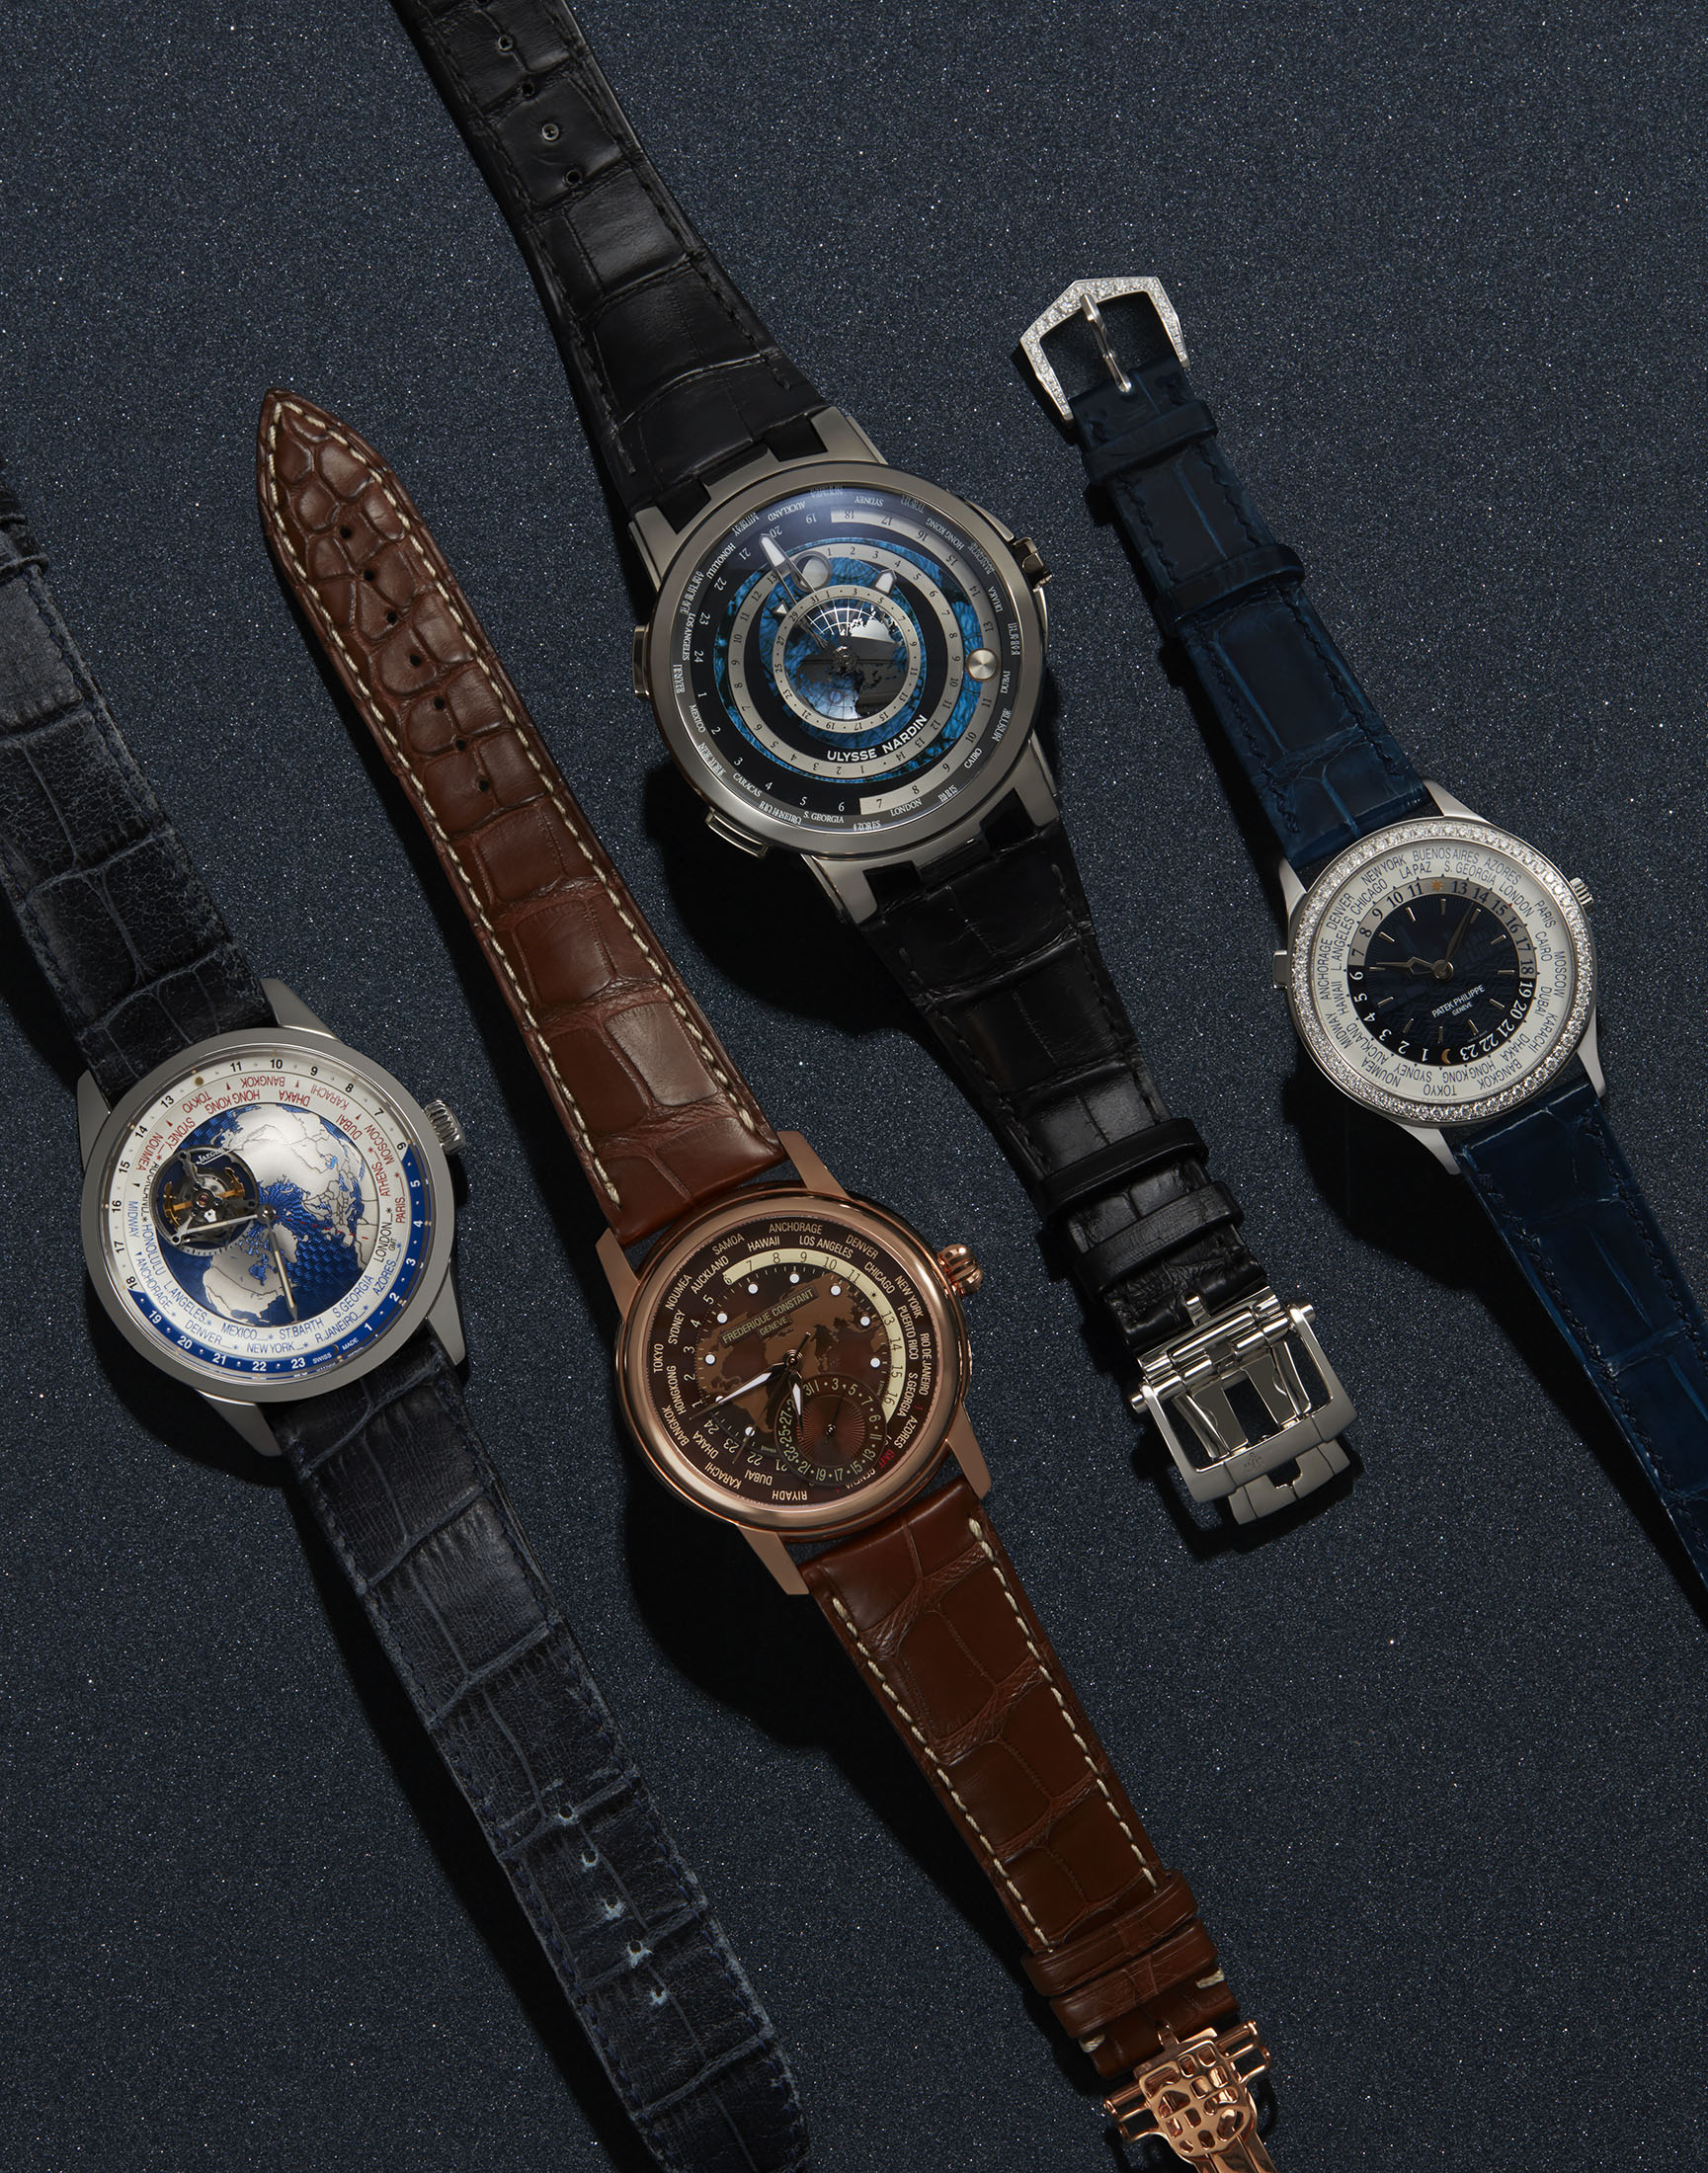 VICENTERRA Swiss Watches Vicenterra-Tycho-Brahe-Tome2-Globe -Astronomical-GMT-ETA-Watch-aBlogtoWatch - VICENTERRA Swiss Watches